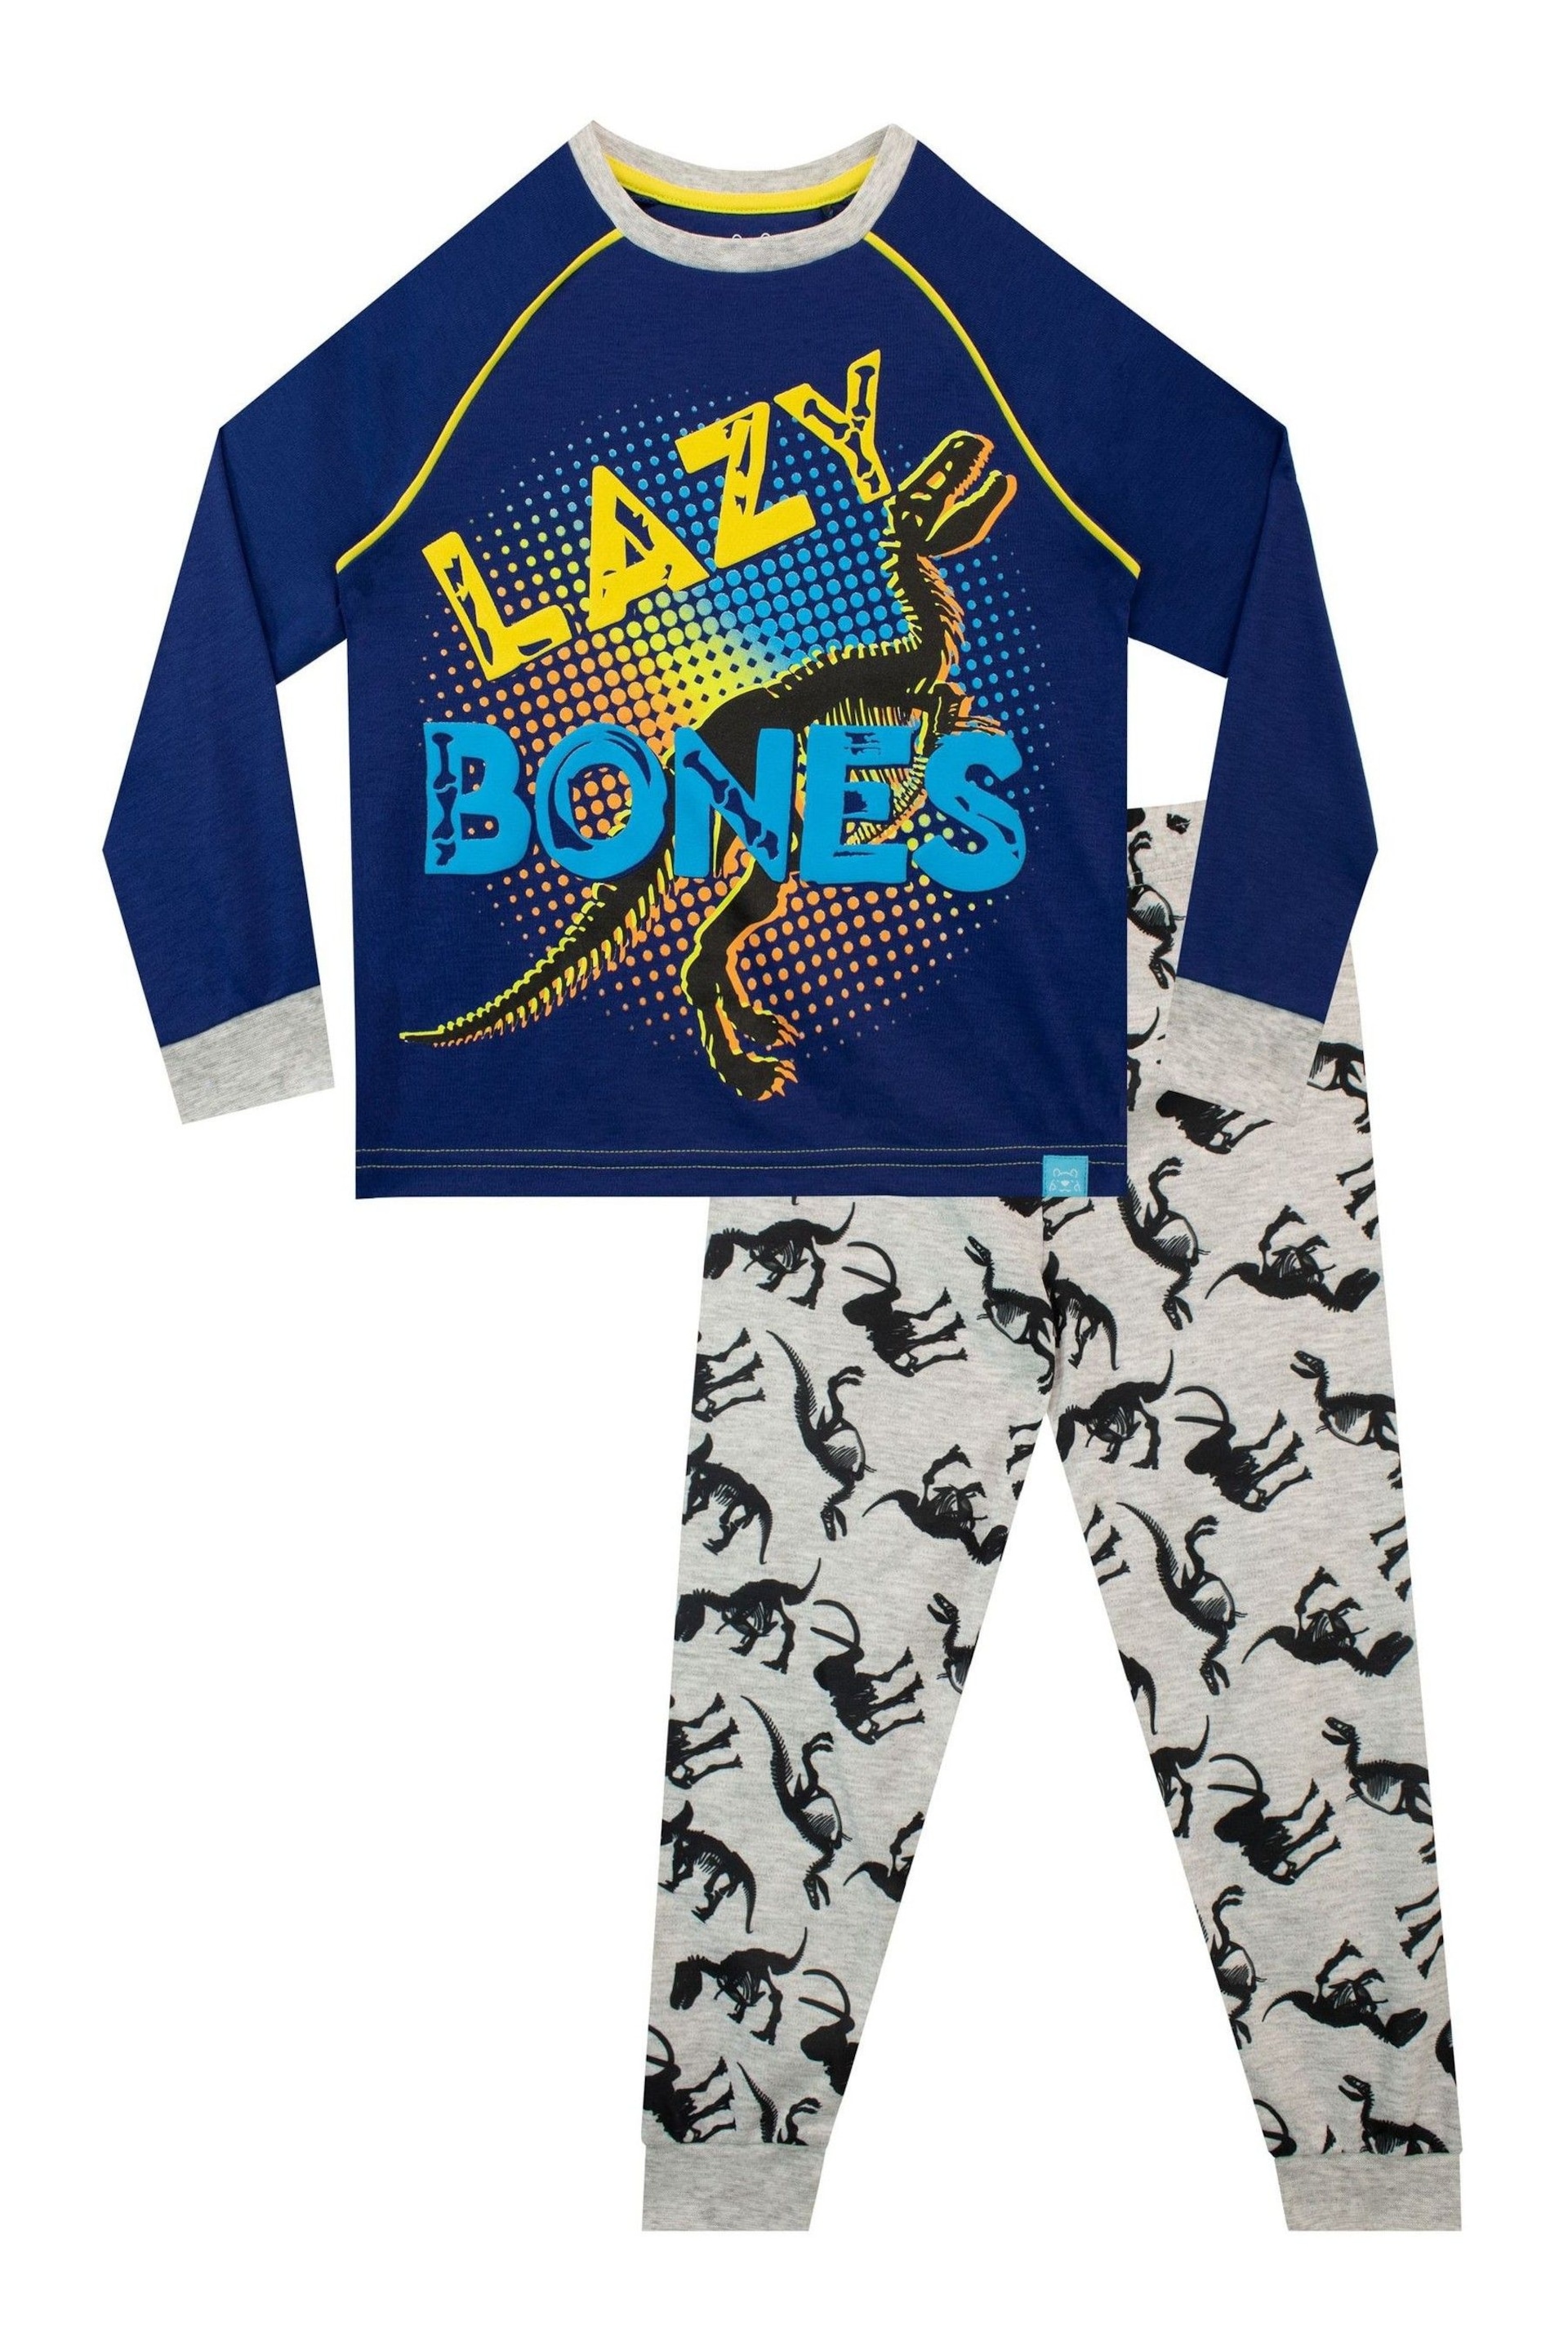 Harry Bear Grey Lazy Bones Pyjamas - Image 1 of 5